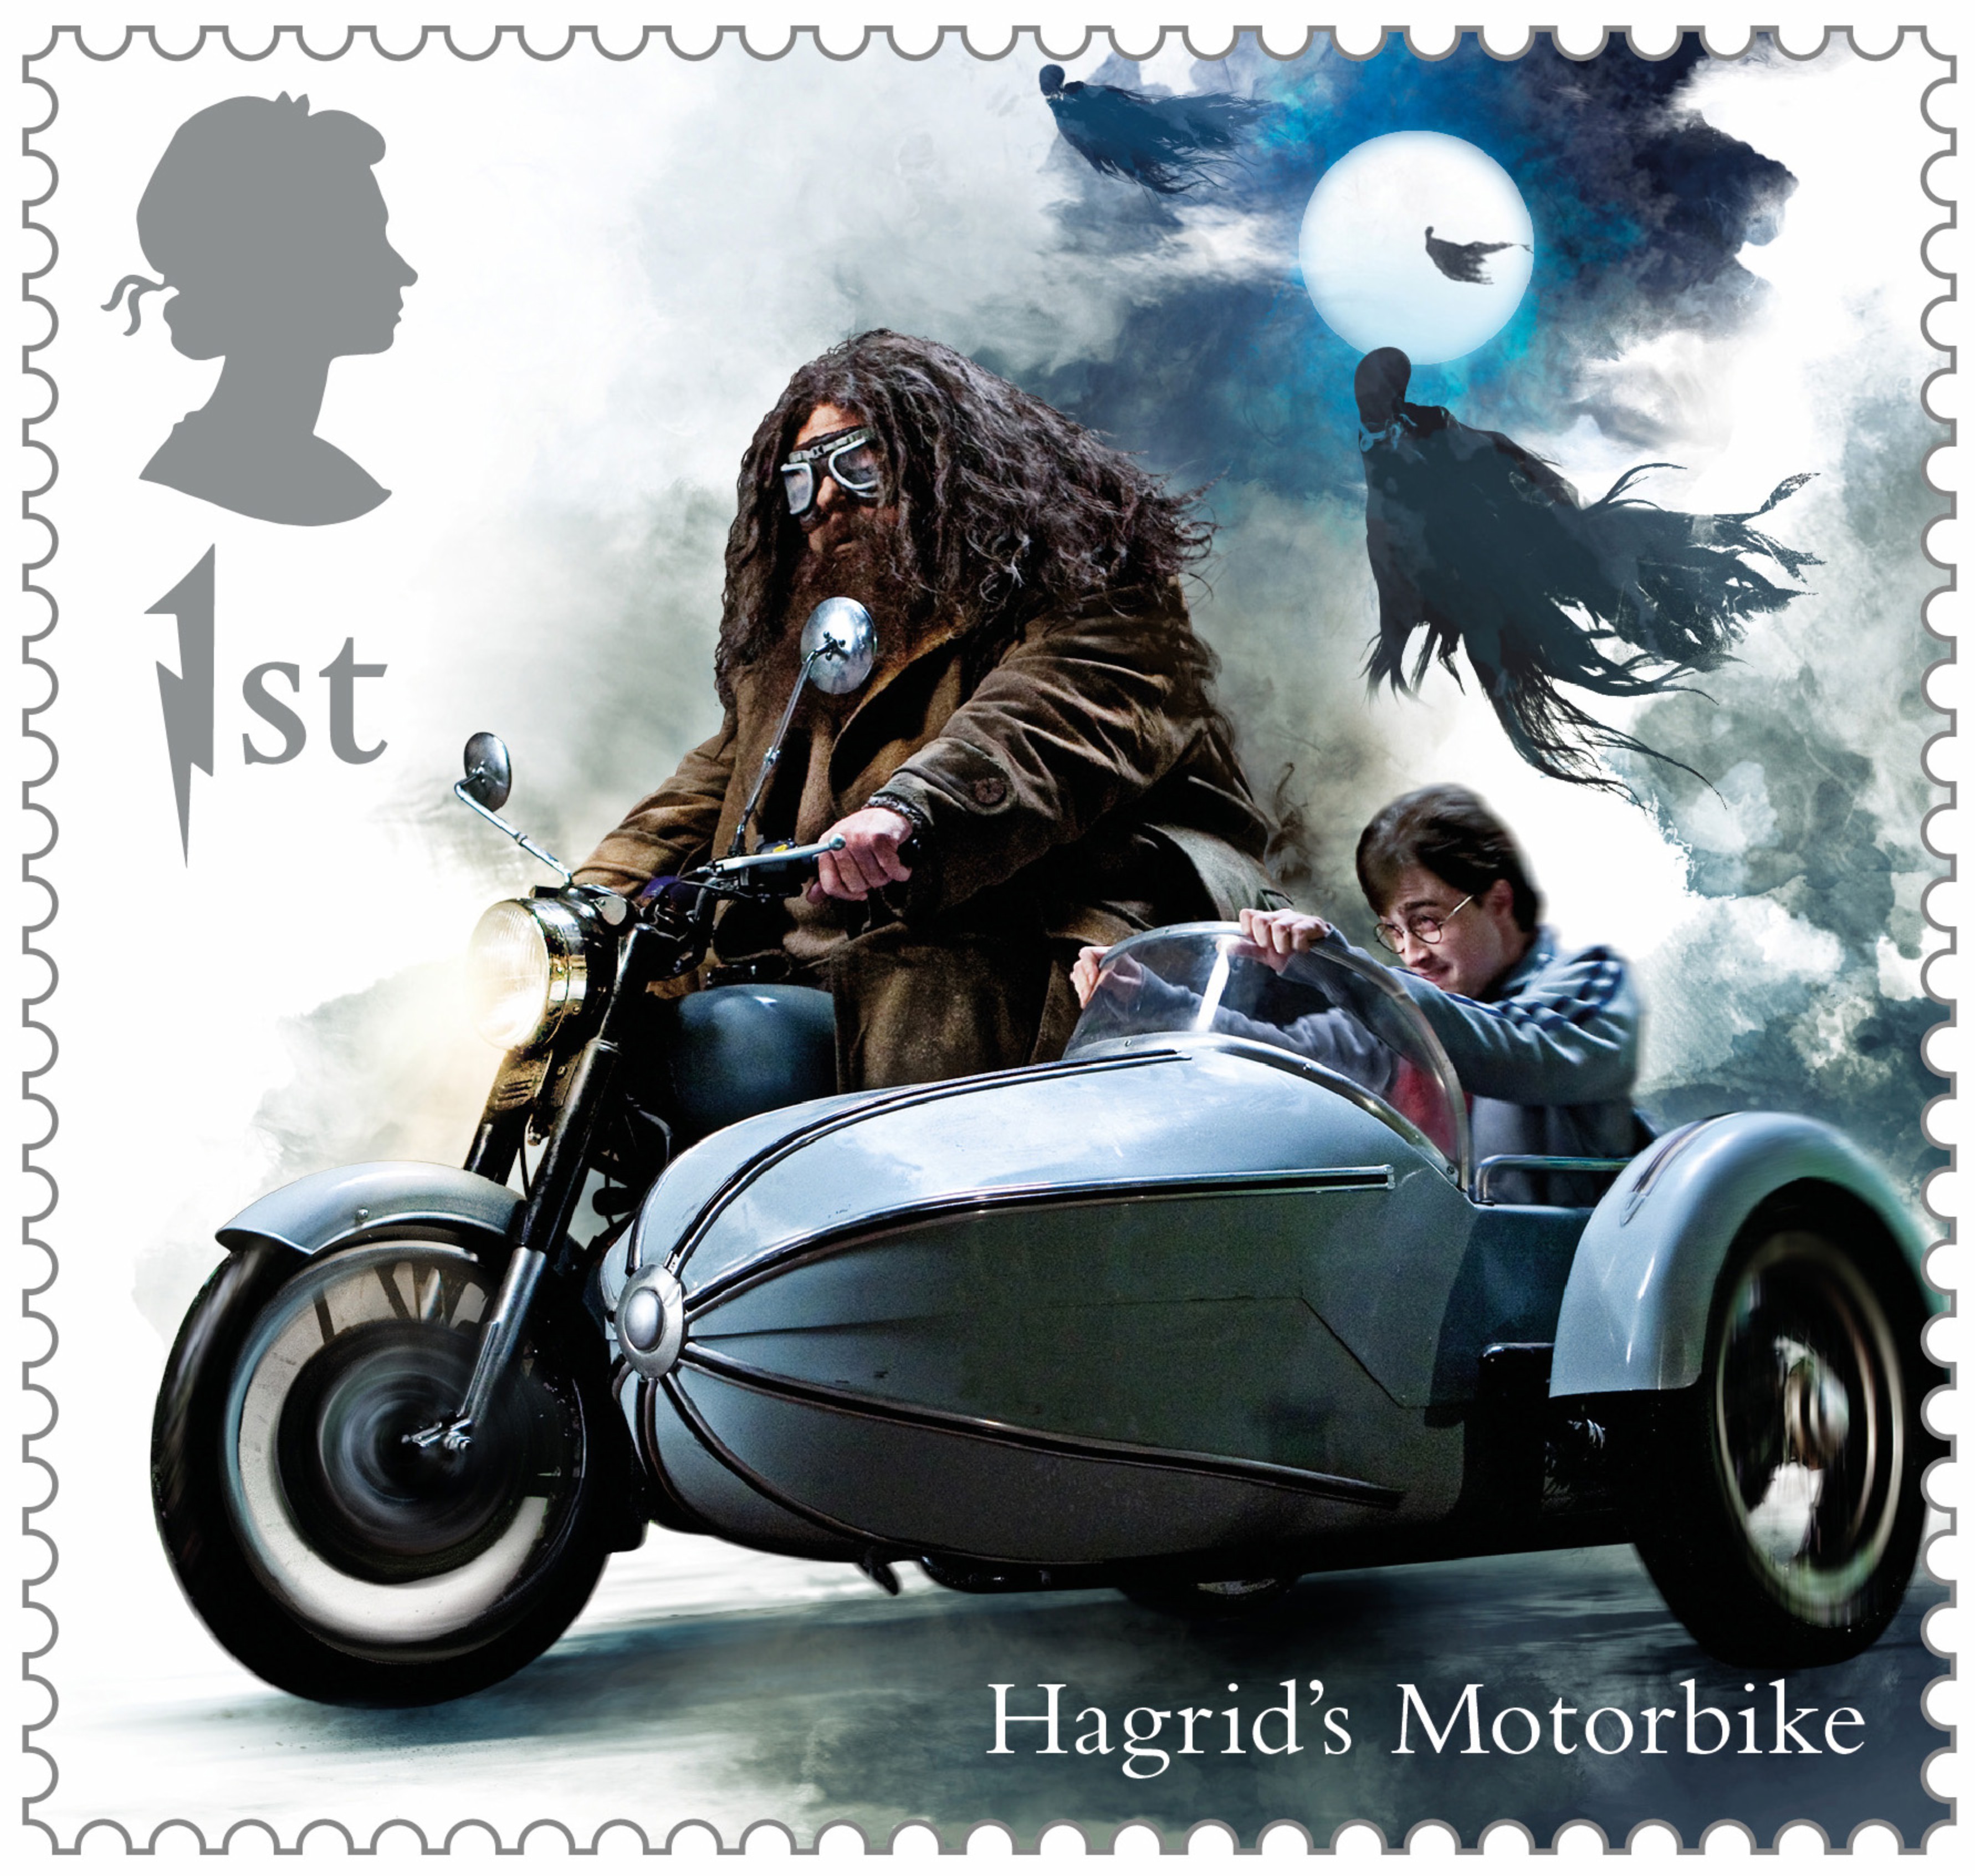 Royal Mail 2018 Harry Potter stamp release - Hagrid's Motorbike